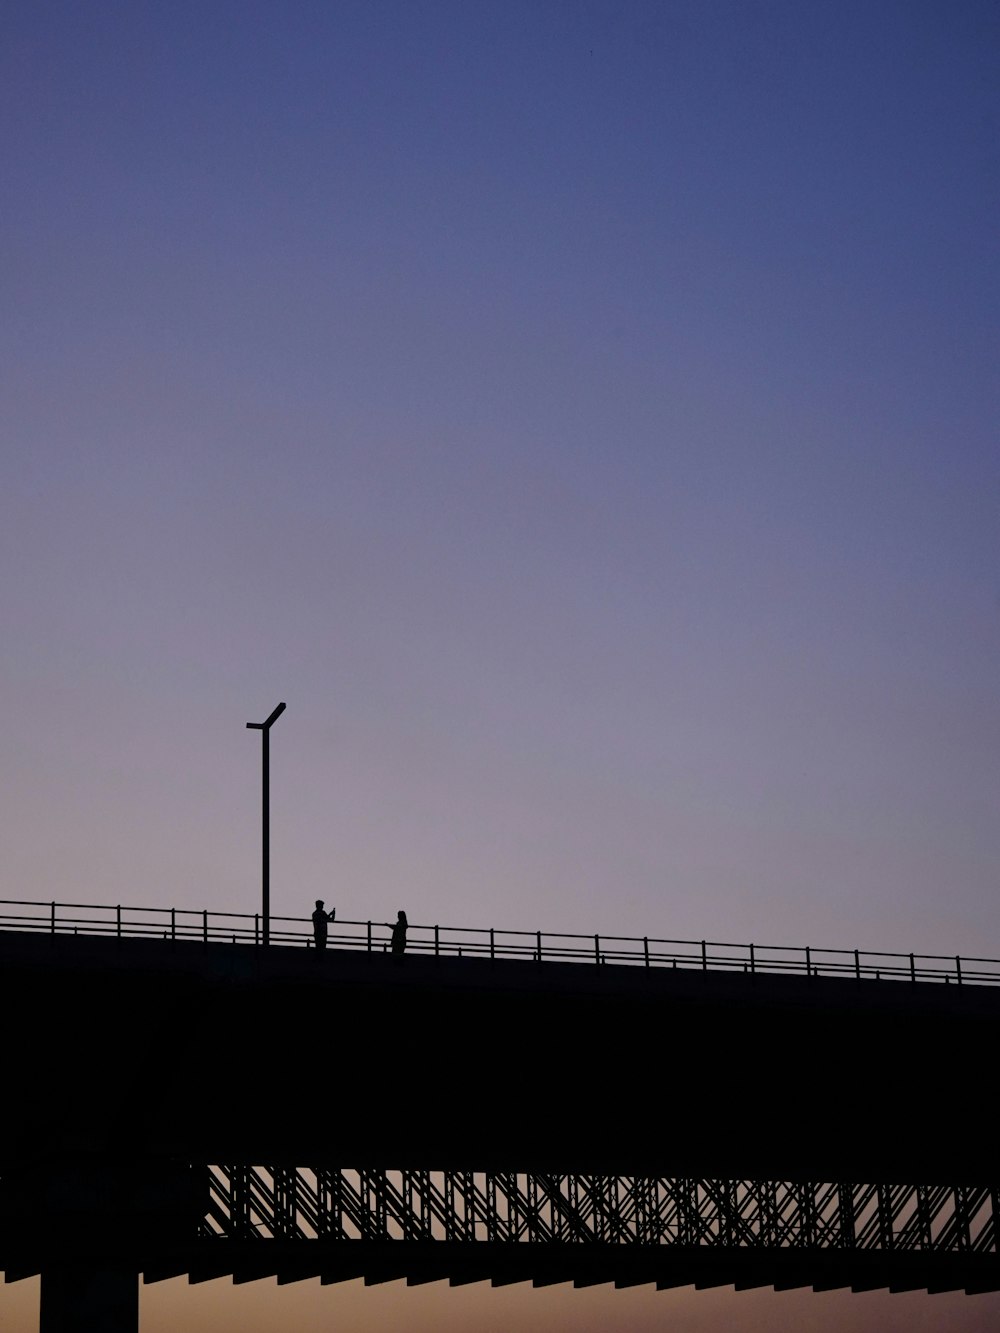 a person walking across a bridge at dusk